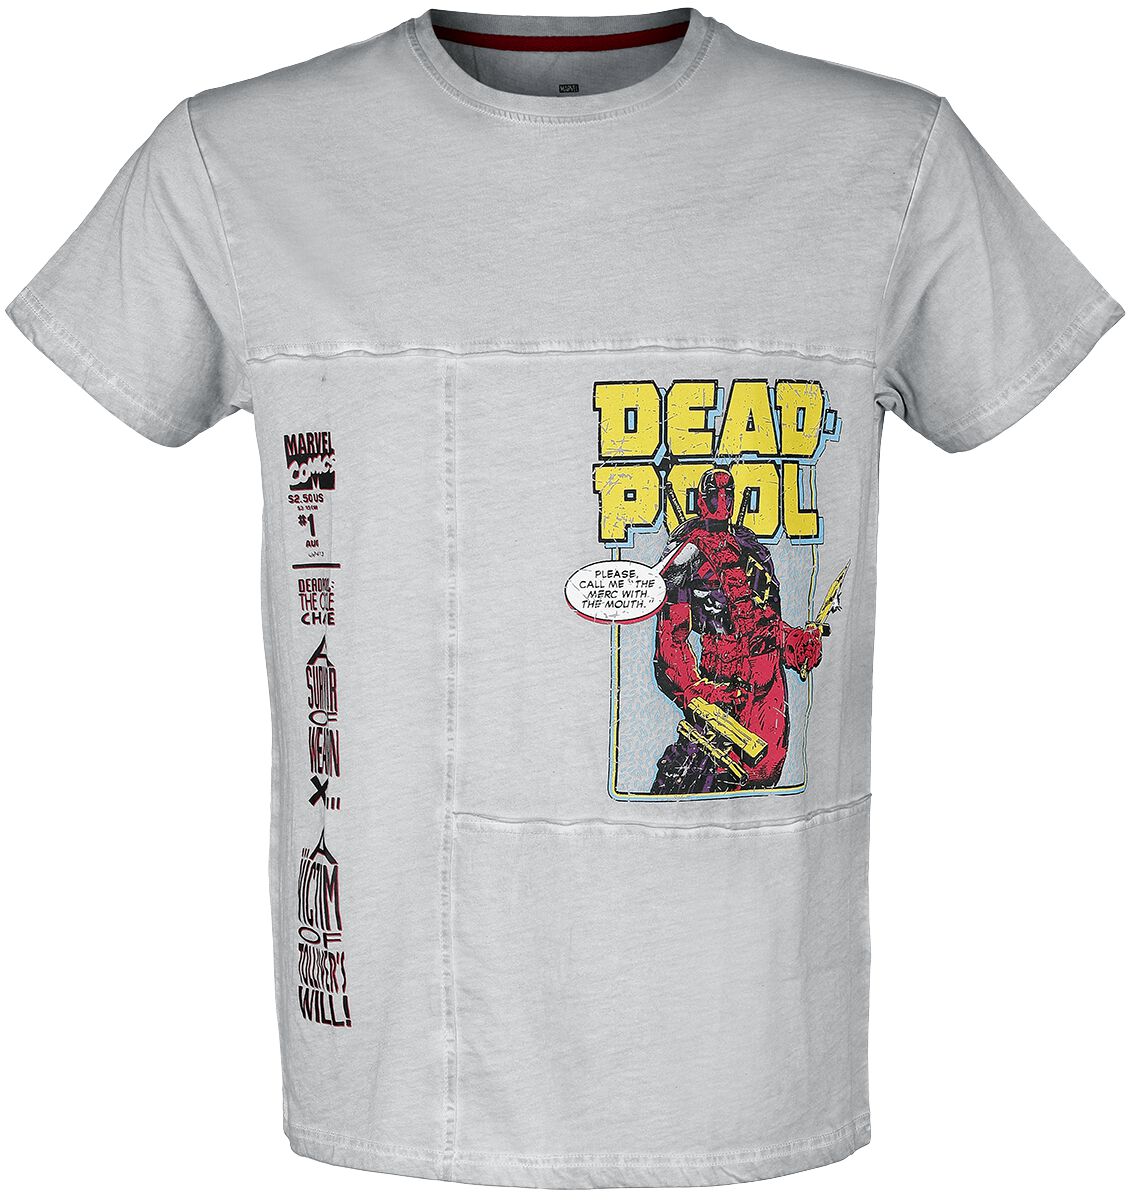 Deadpool - Marvel T-Shirt - 90 - S - für Männer - Größe S - grau  - EMP exklusives Merchandise!